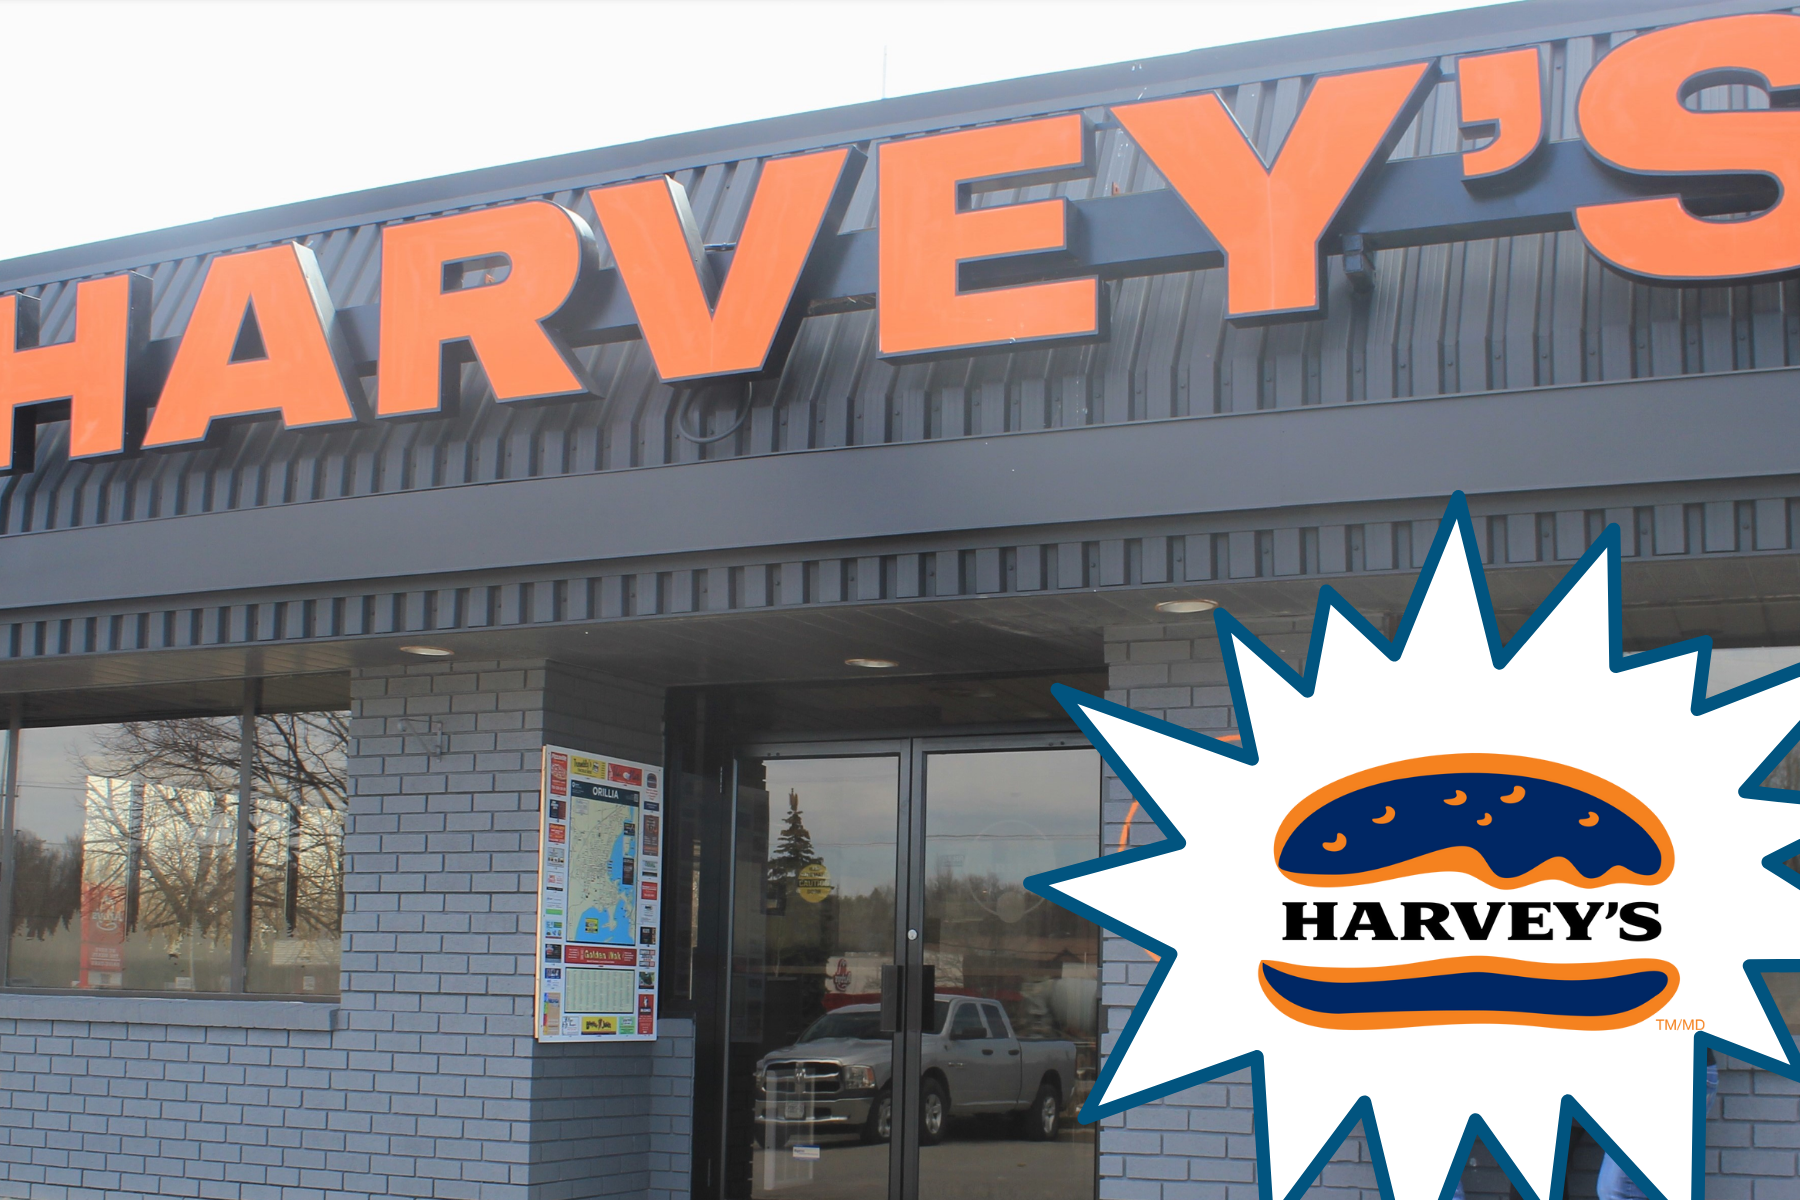 The exterior of Harveys restaurant doors